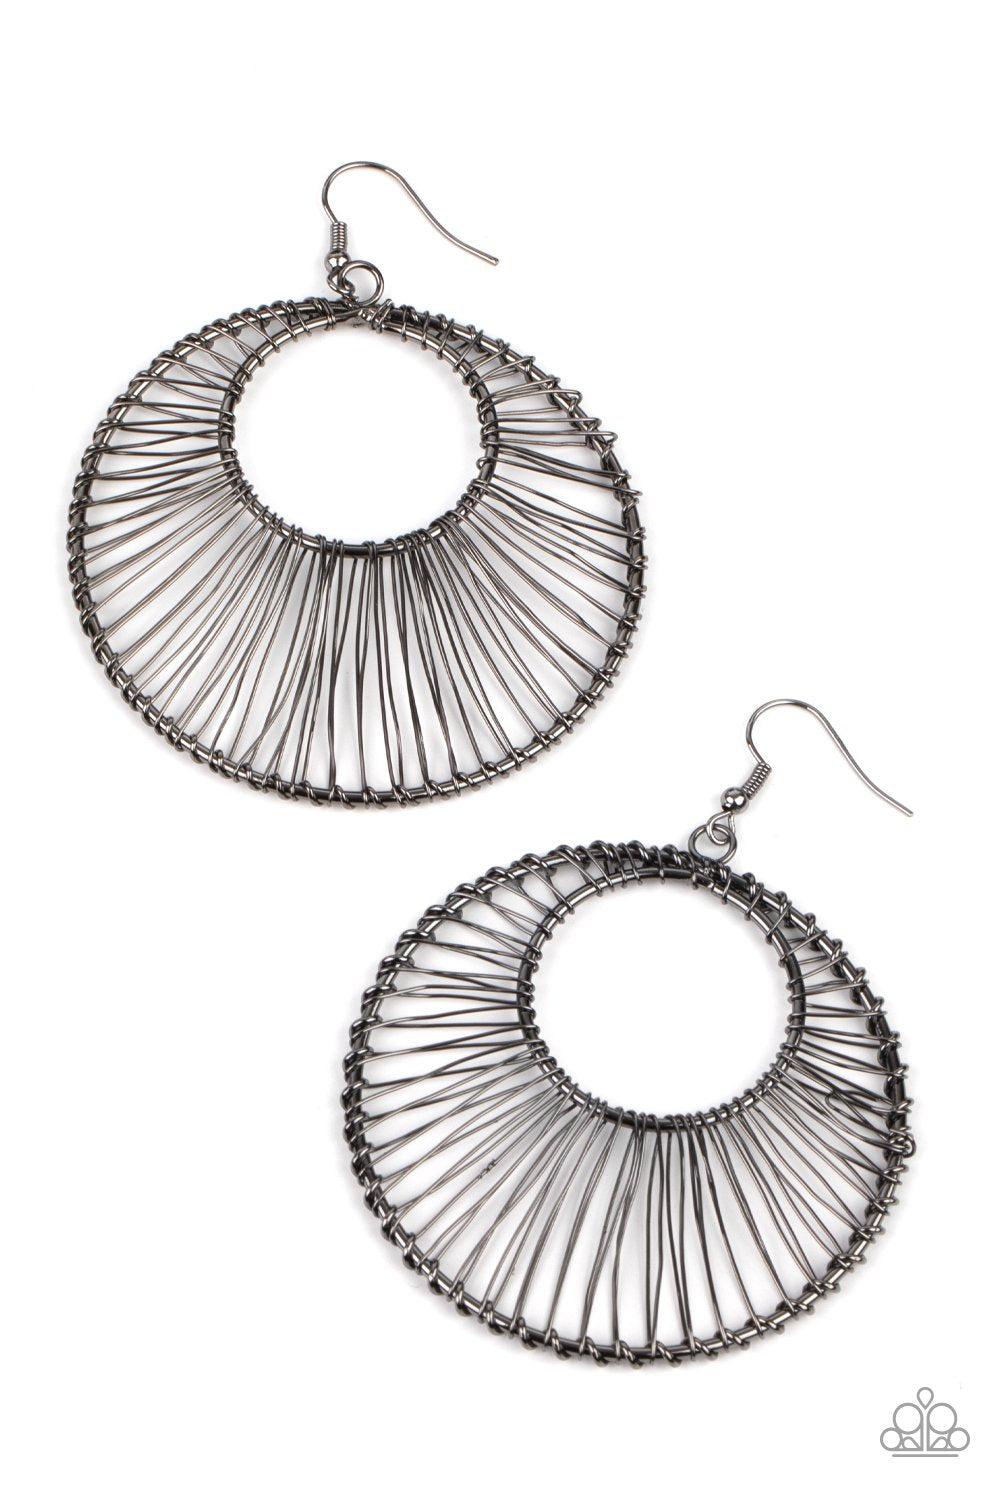 Artisan Applique Gunmetal Black Wire Hoop Earrings - Paparazzi Accessories- lightbox - CarasShop.com - $5 Jewelry by Cara Jewels